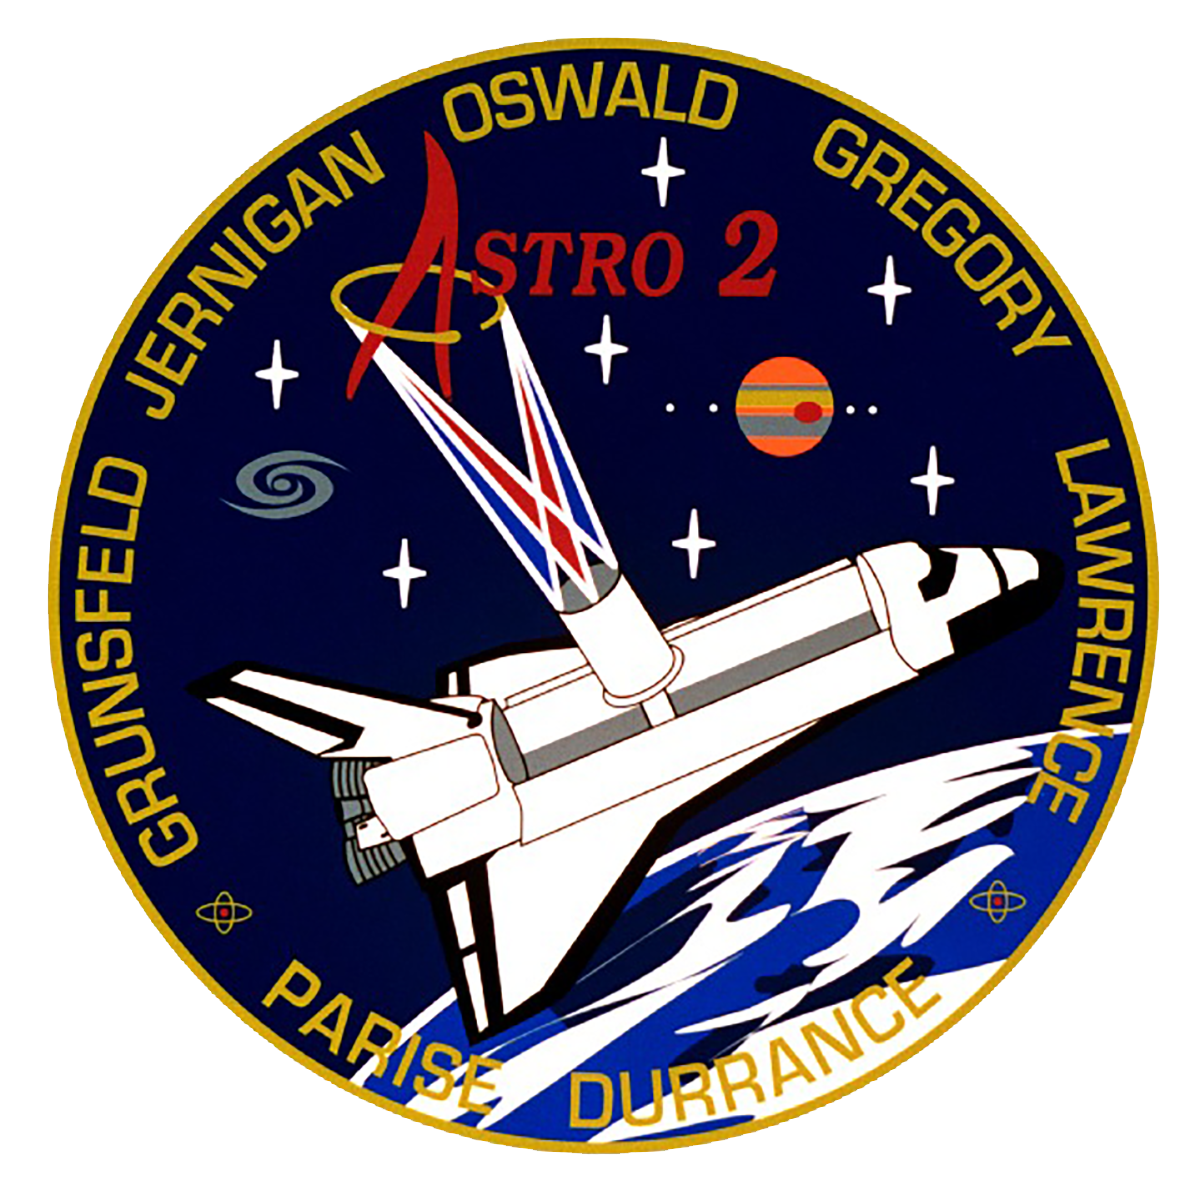 STS-67 (Endeavour)